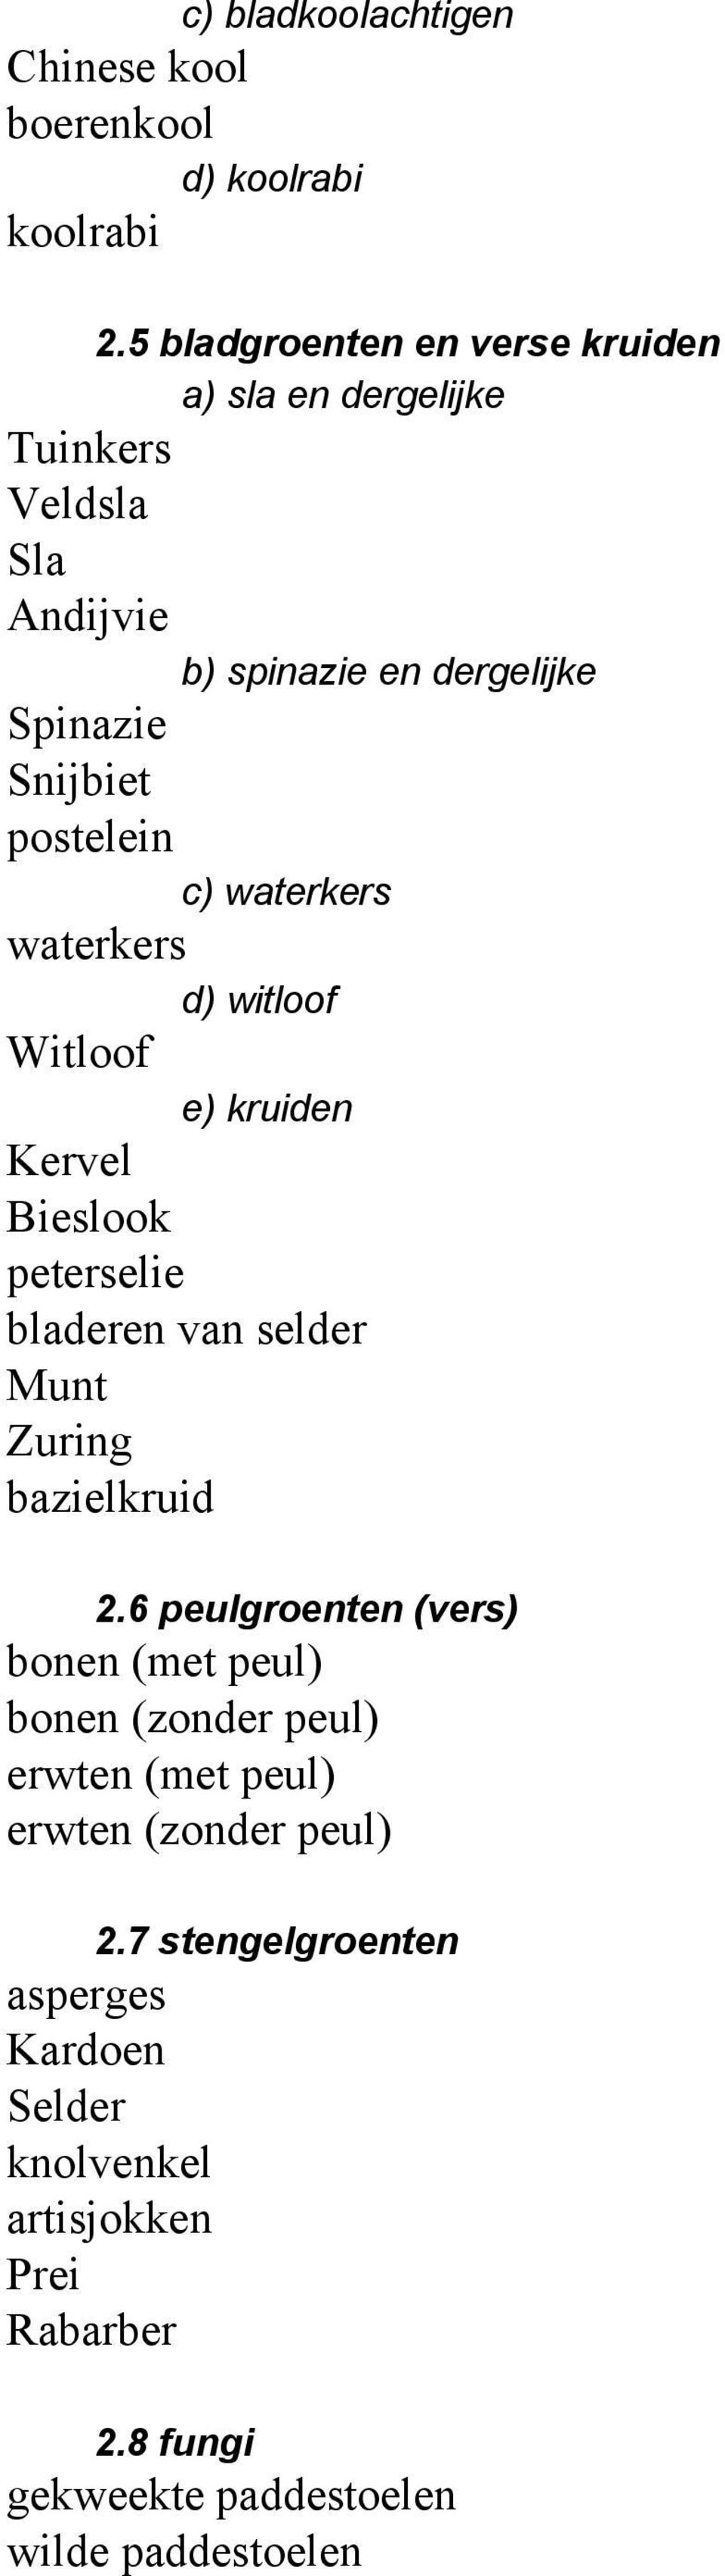 waterkers waterkers d) witloof Witloof e) kruiden Kervel Bieslook peterselie bladeren van selder Munt Zuring bazielkruid 2.